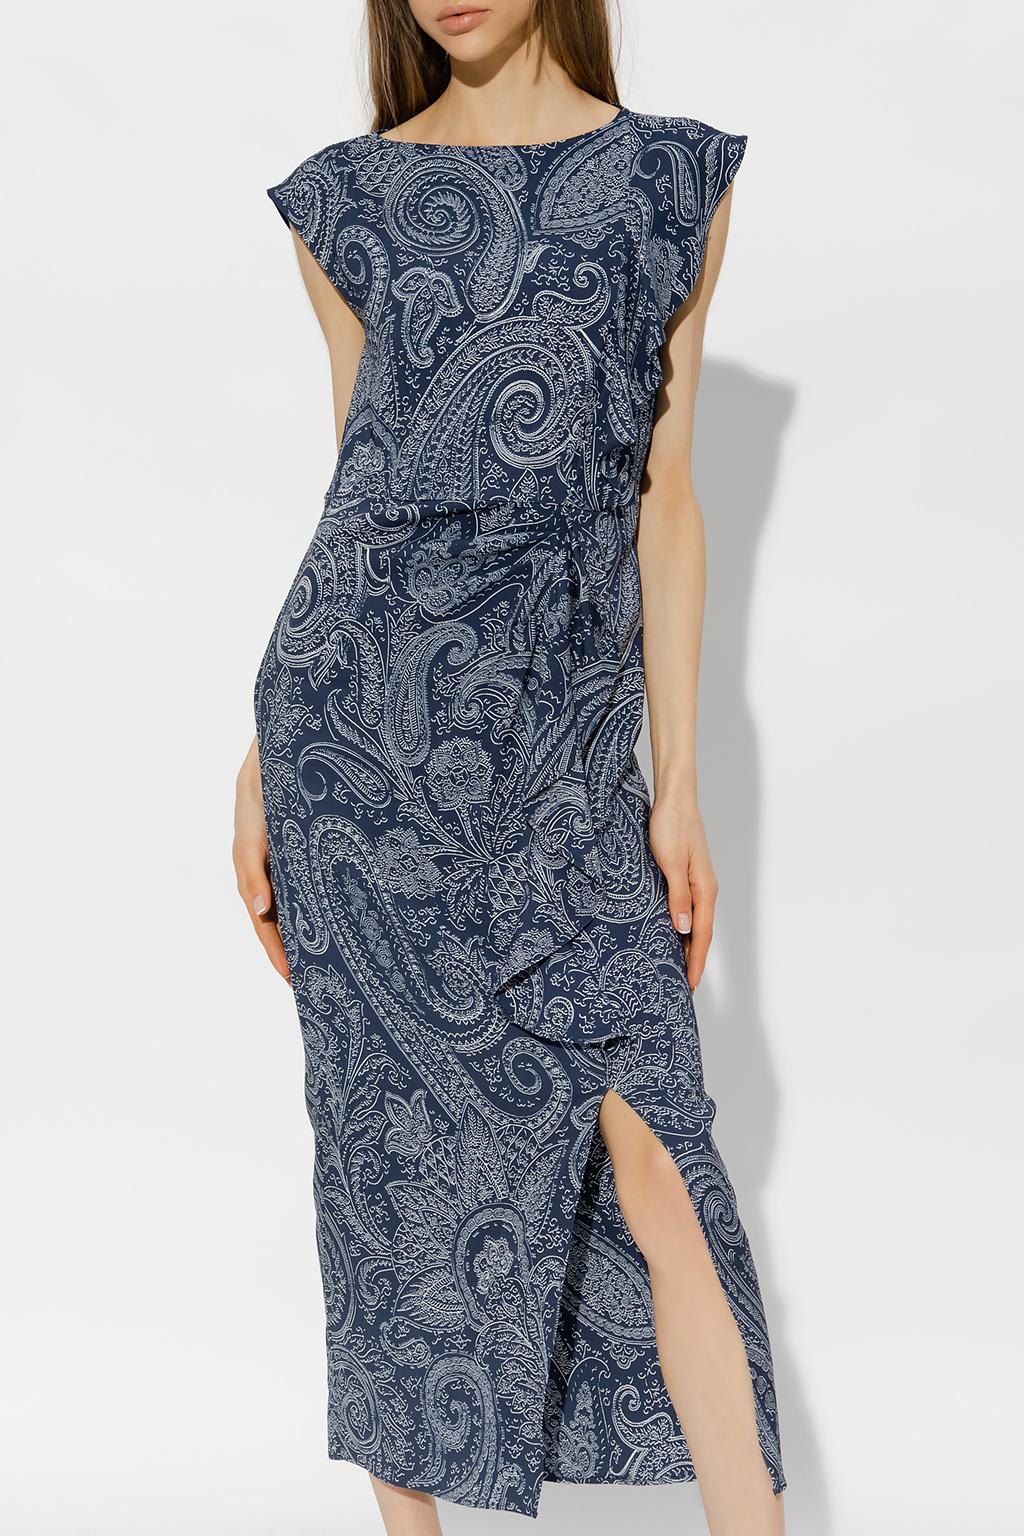 Etro Paisley Dress in Blue | Lyst